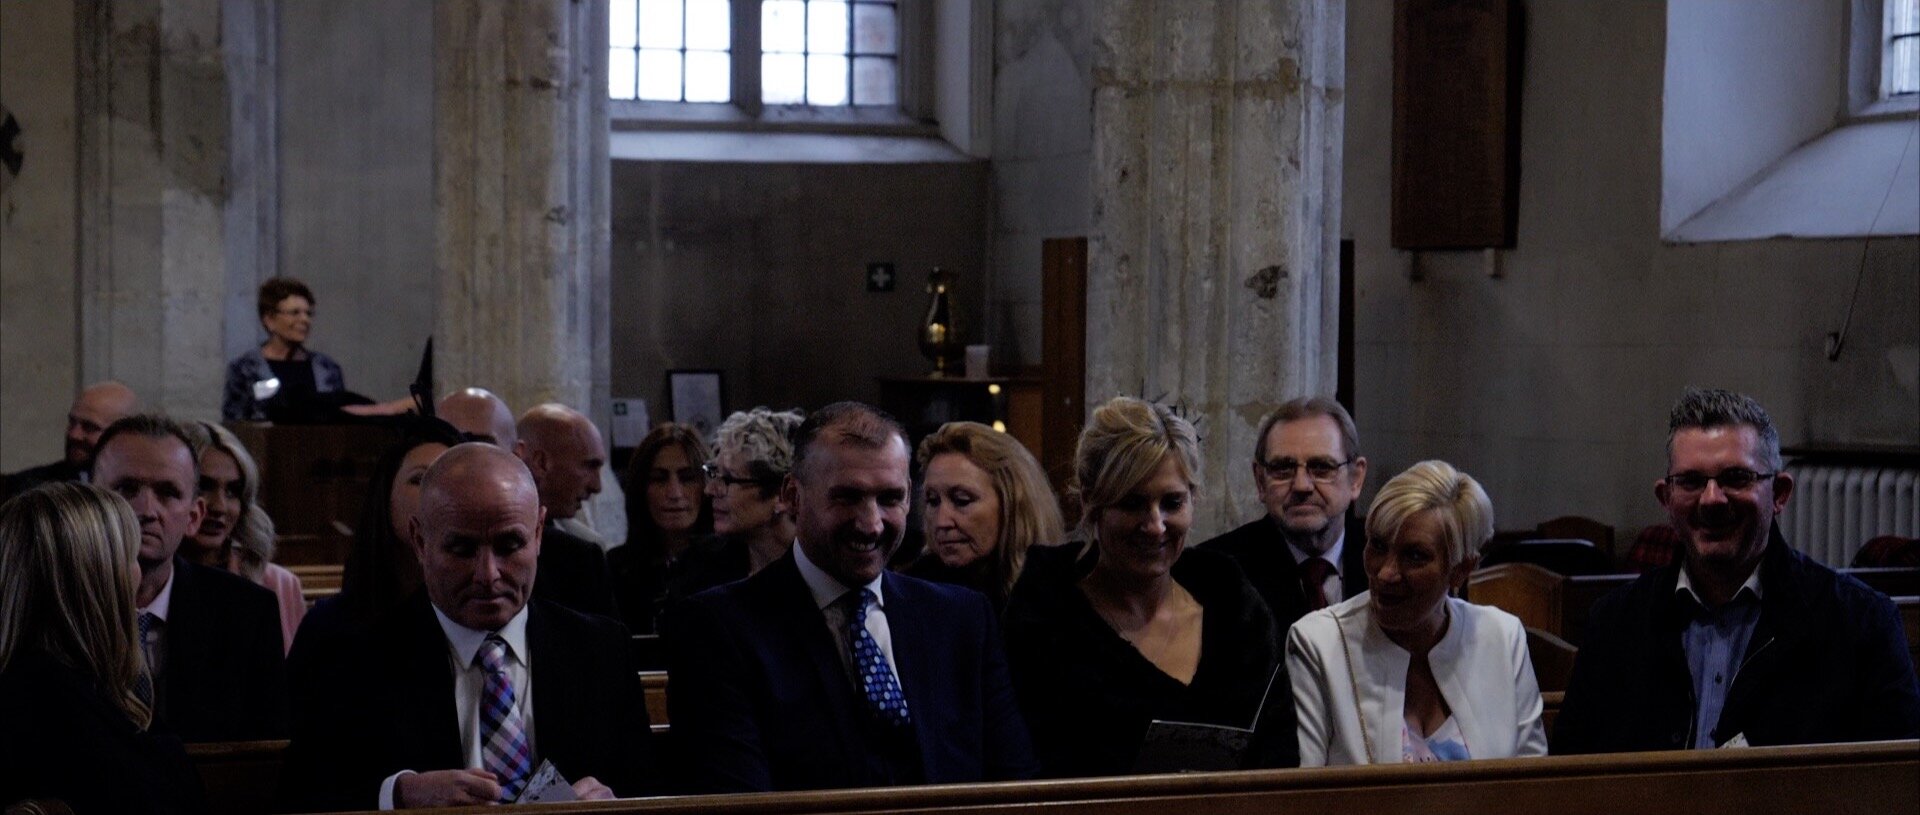 Essex wedding video at a church Rayleigh.jpg